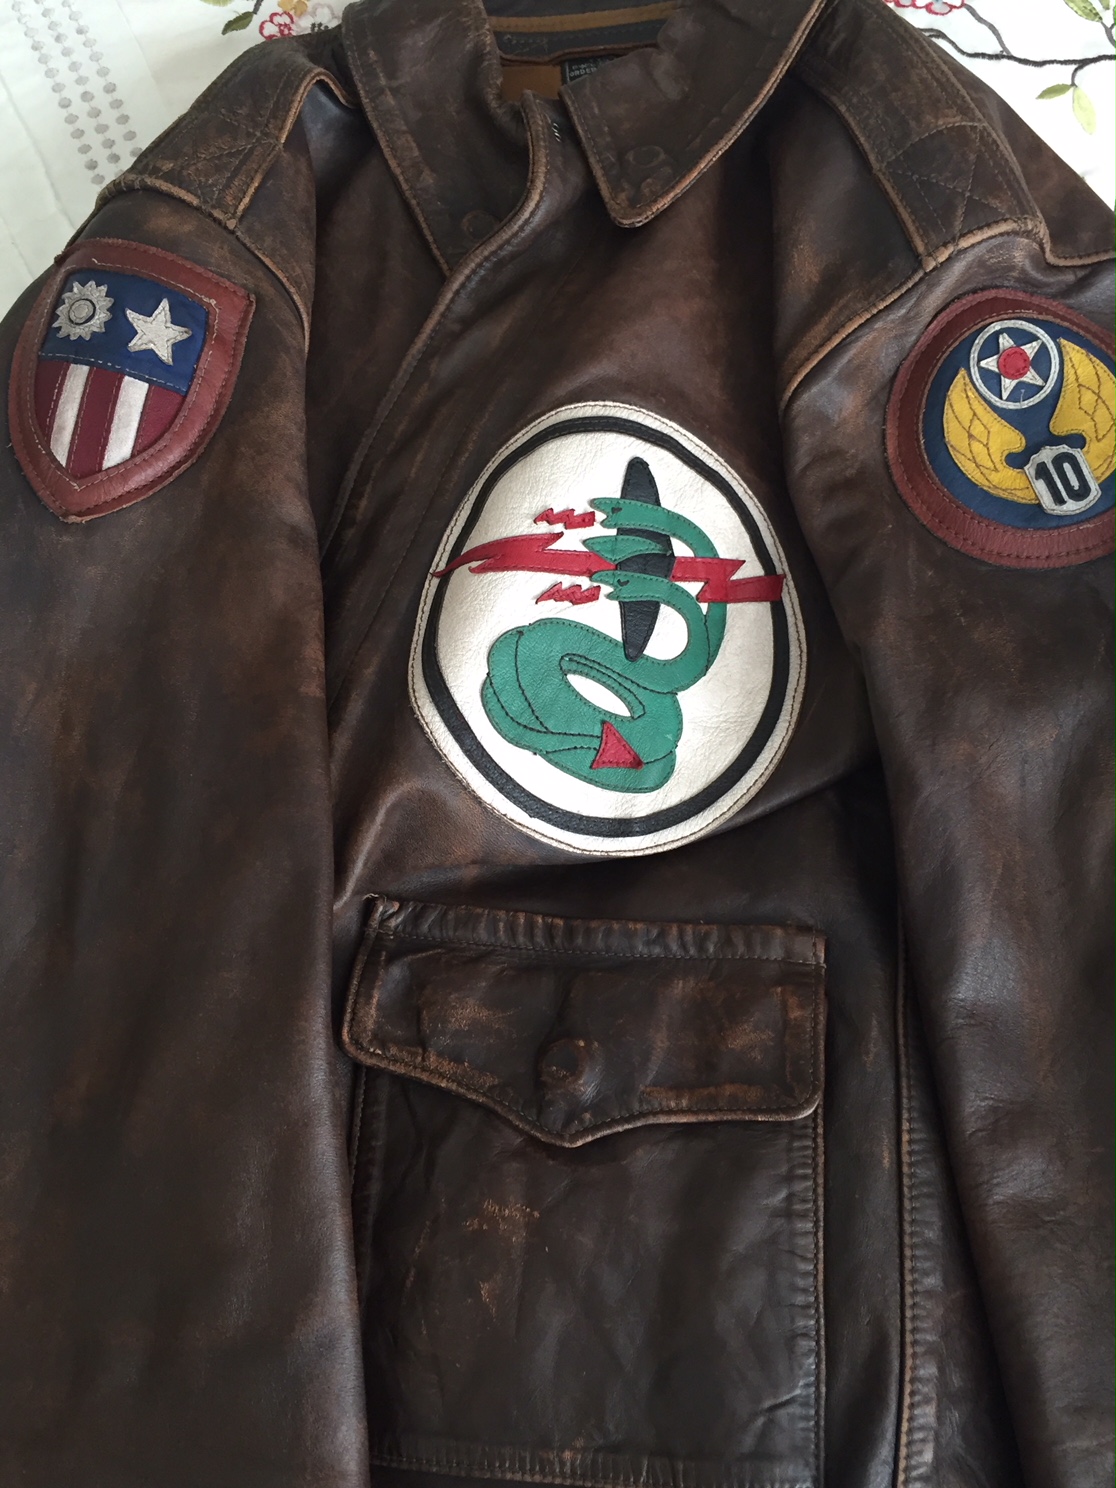 Shoulder patch/ decal options | Vintage Leather Jackets Forum